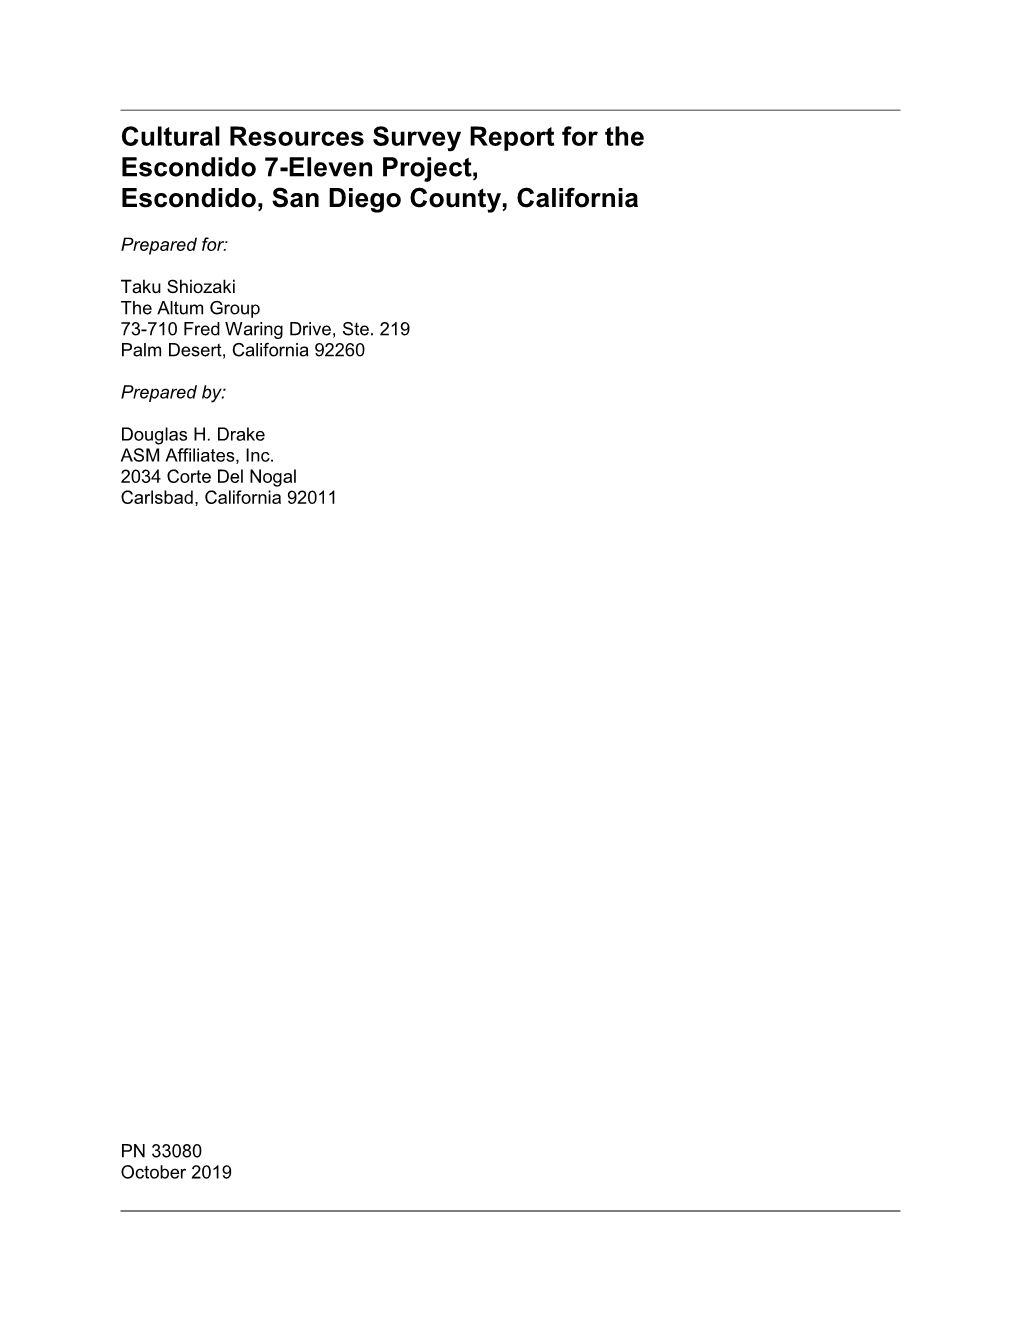 Cultural Resources Survey Report for the Escondido 7-Eleven Project, Escondido, San Diego County, California